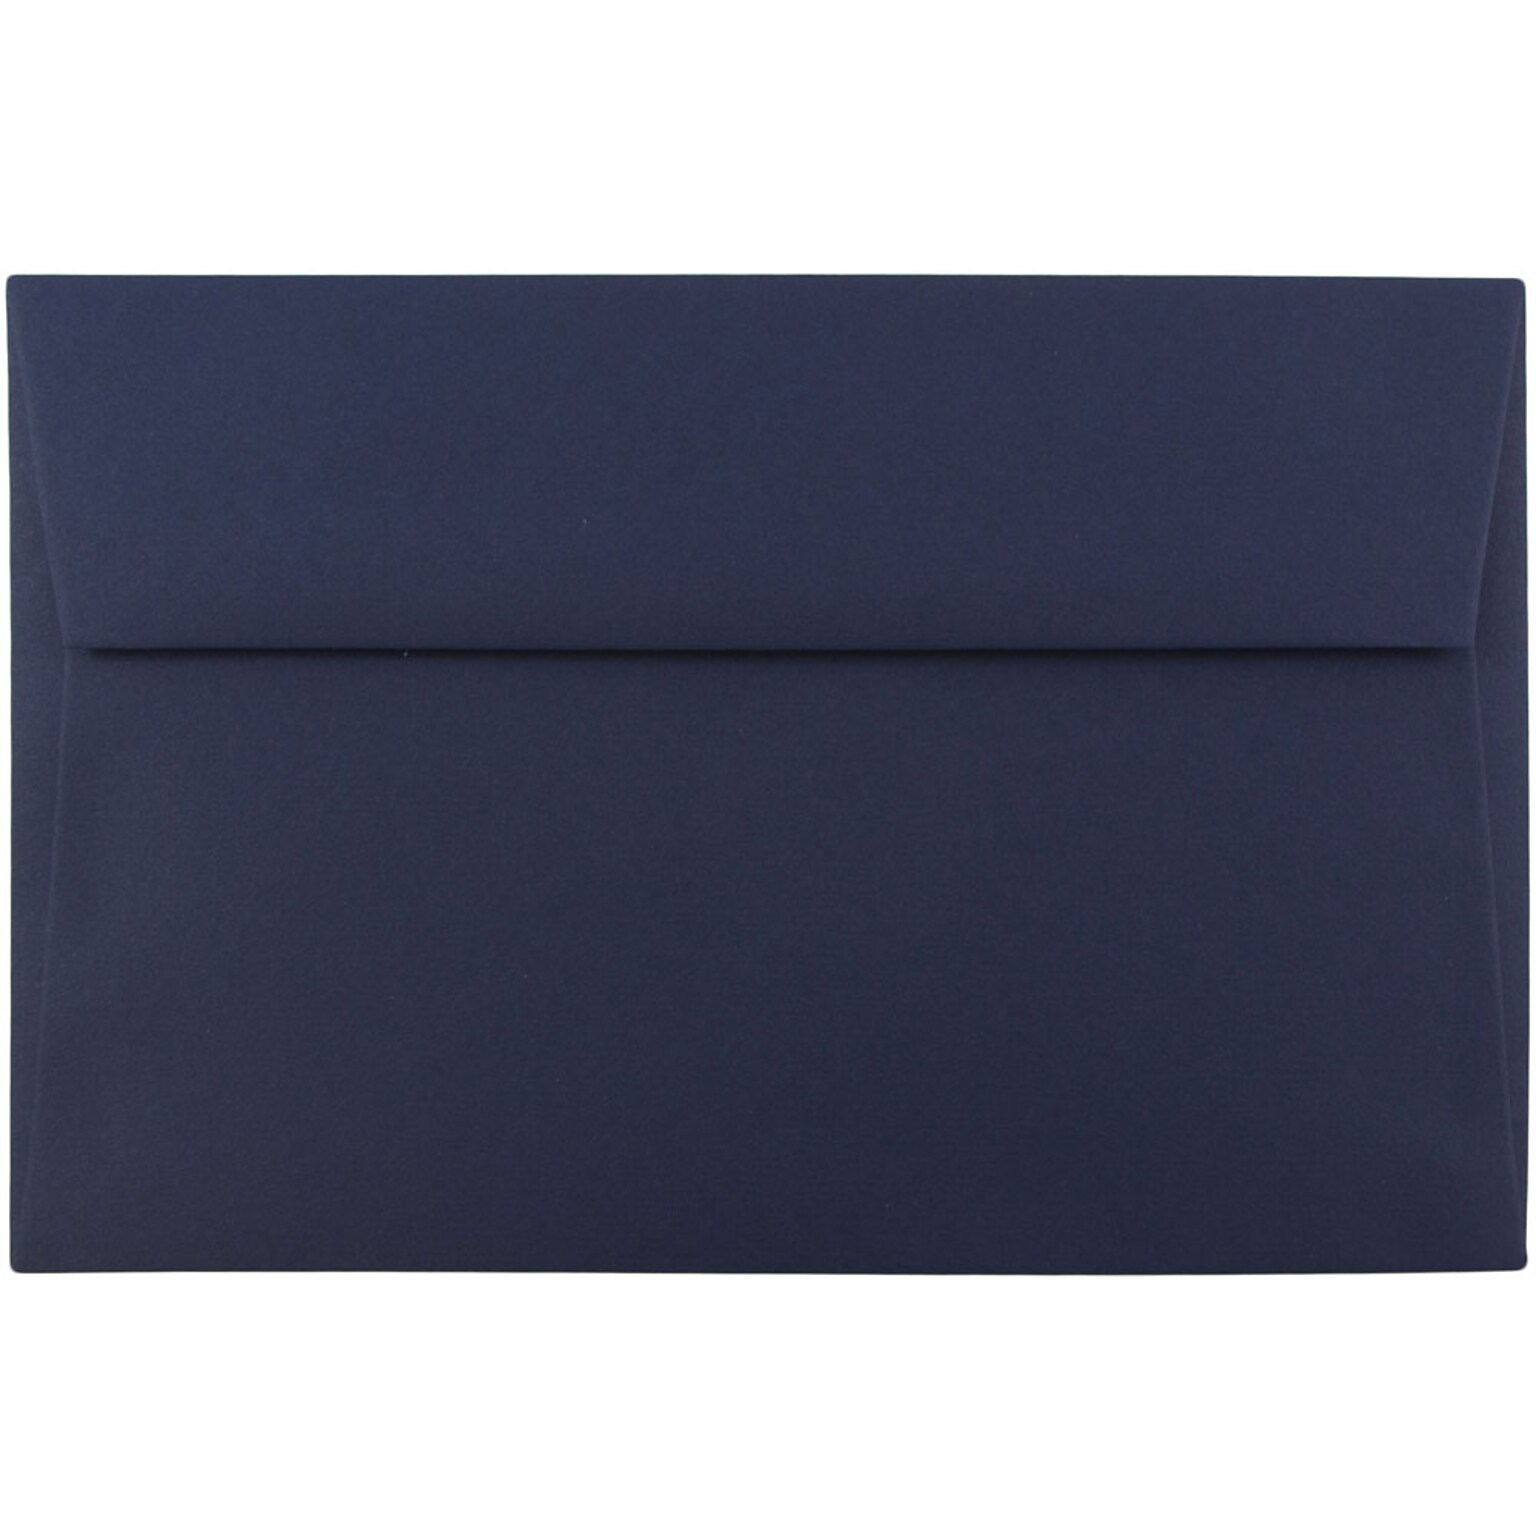 JAM Paper A9 Invitation Envelopes, 5 3/4 x 8 3/4, Navy Blue, 1000/Carton (LEBA792B)